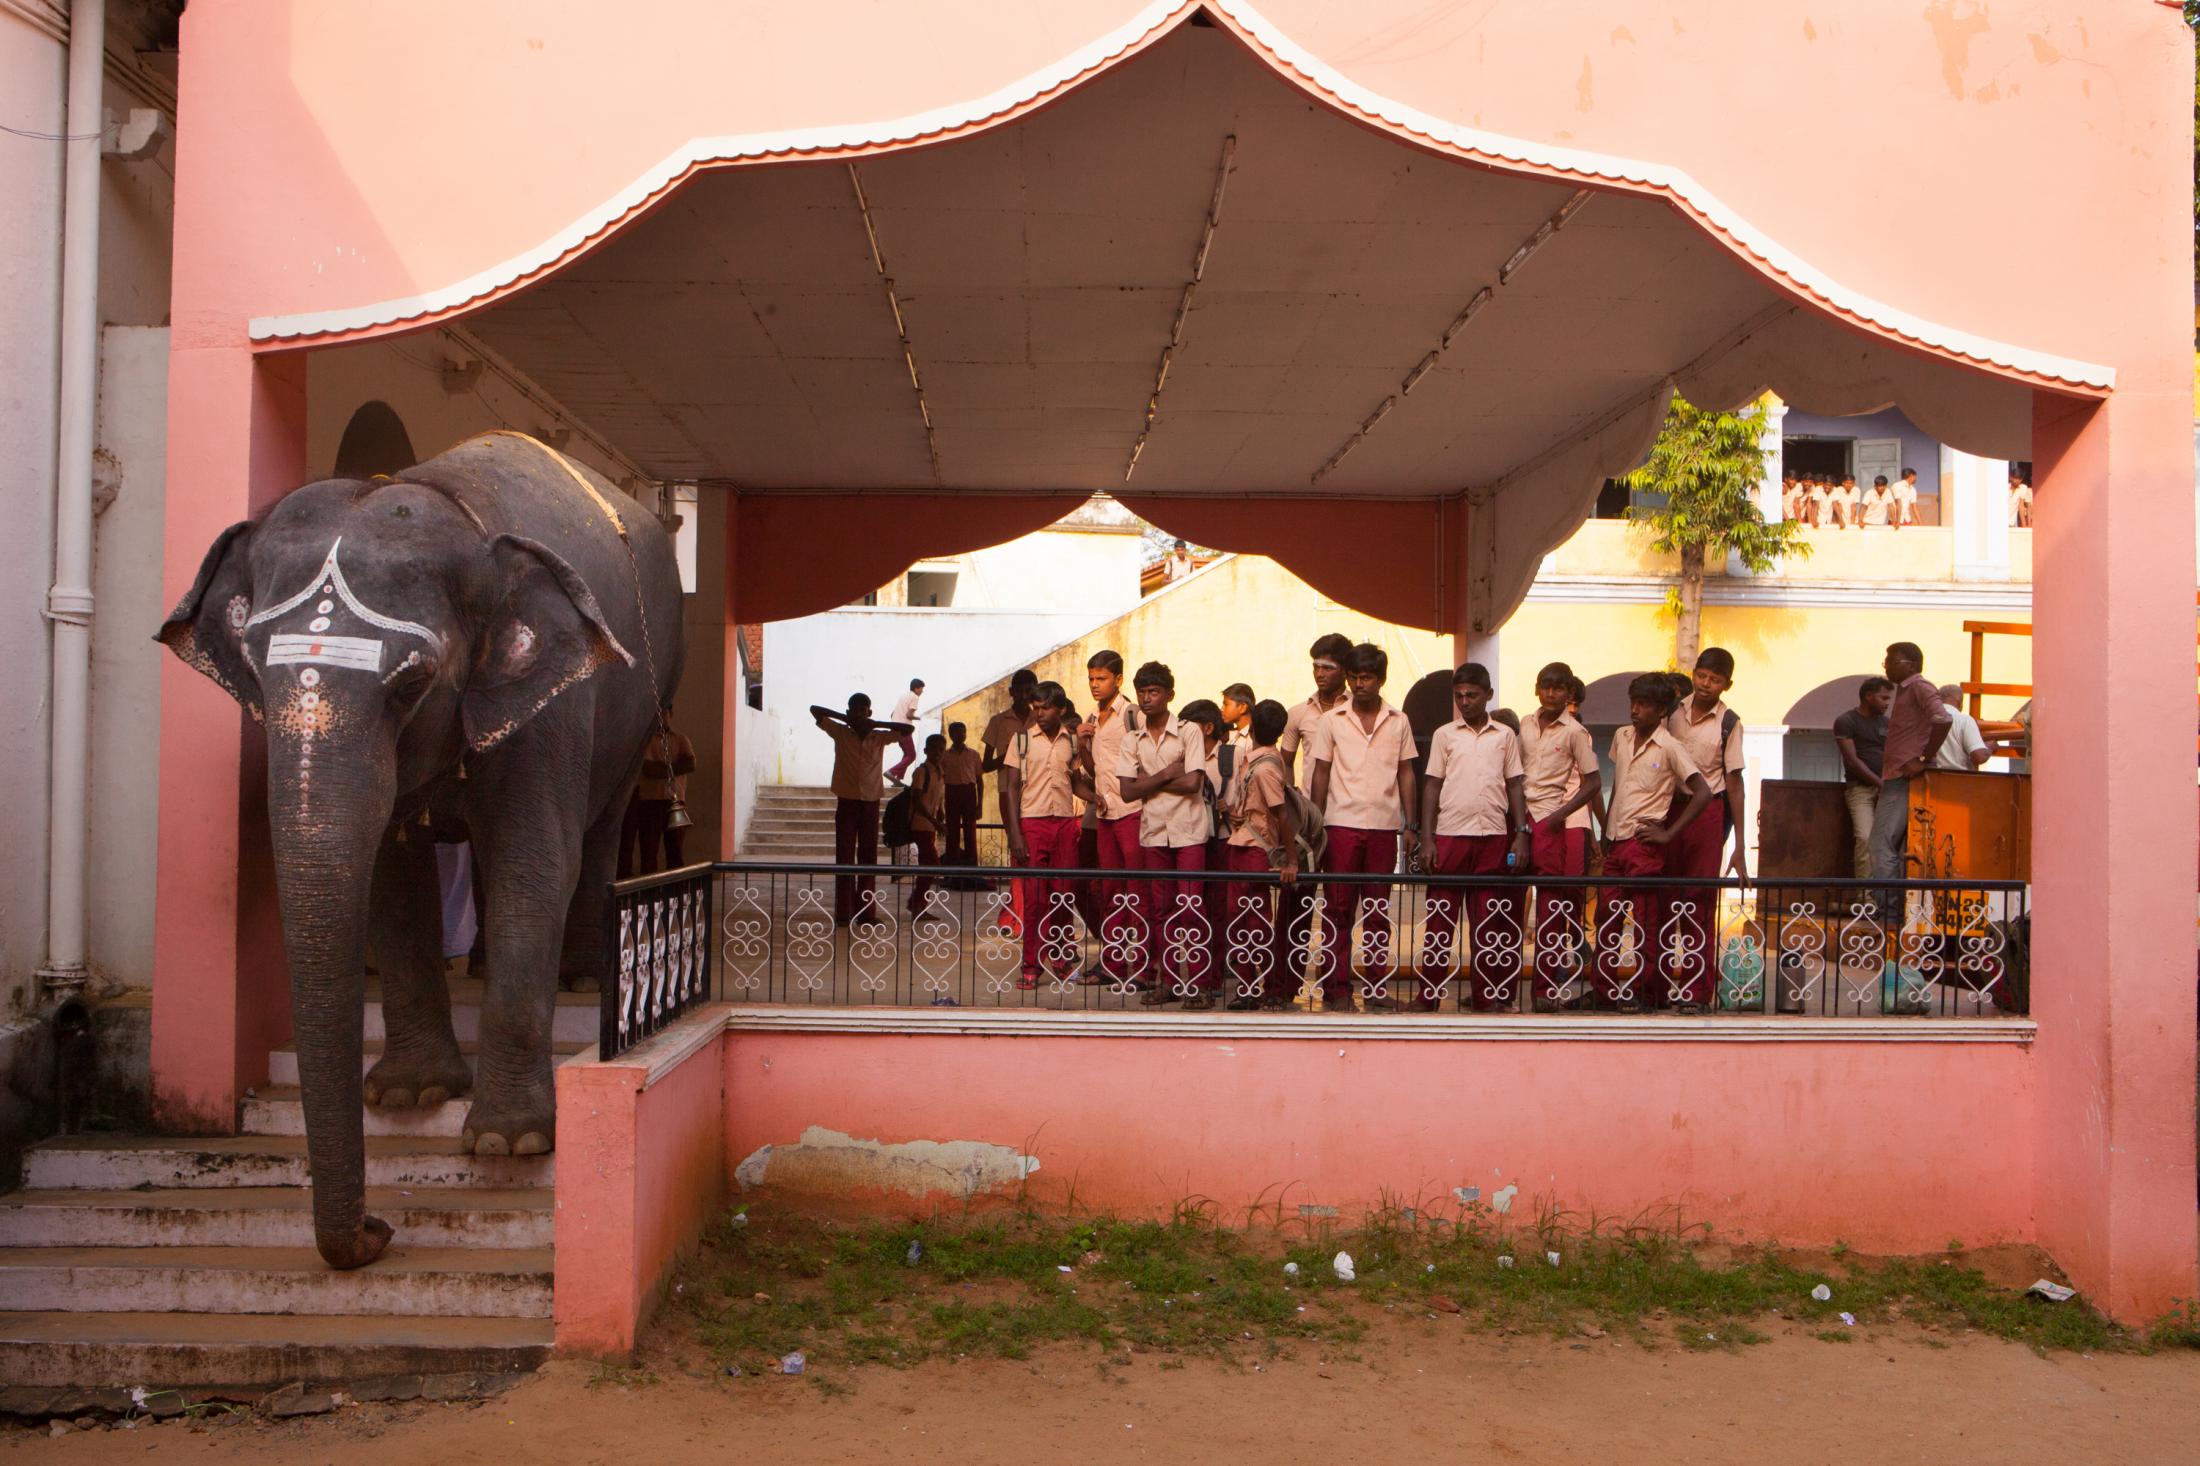 Temple elephant rejuvenation camp-DER SPIEGEL 